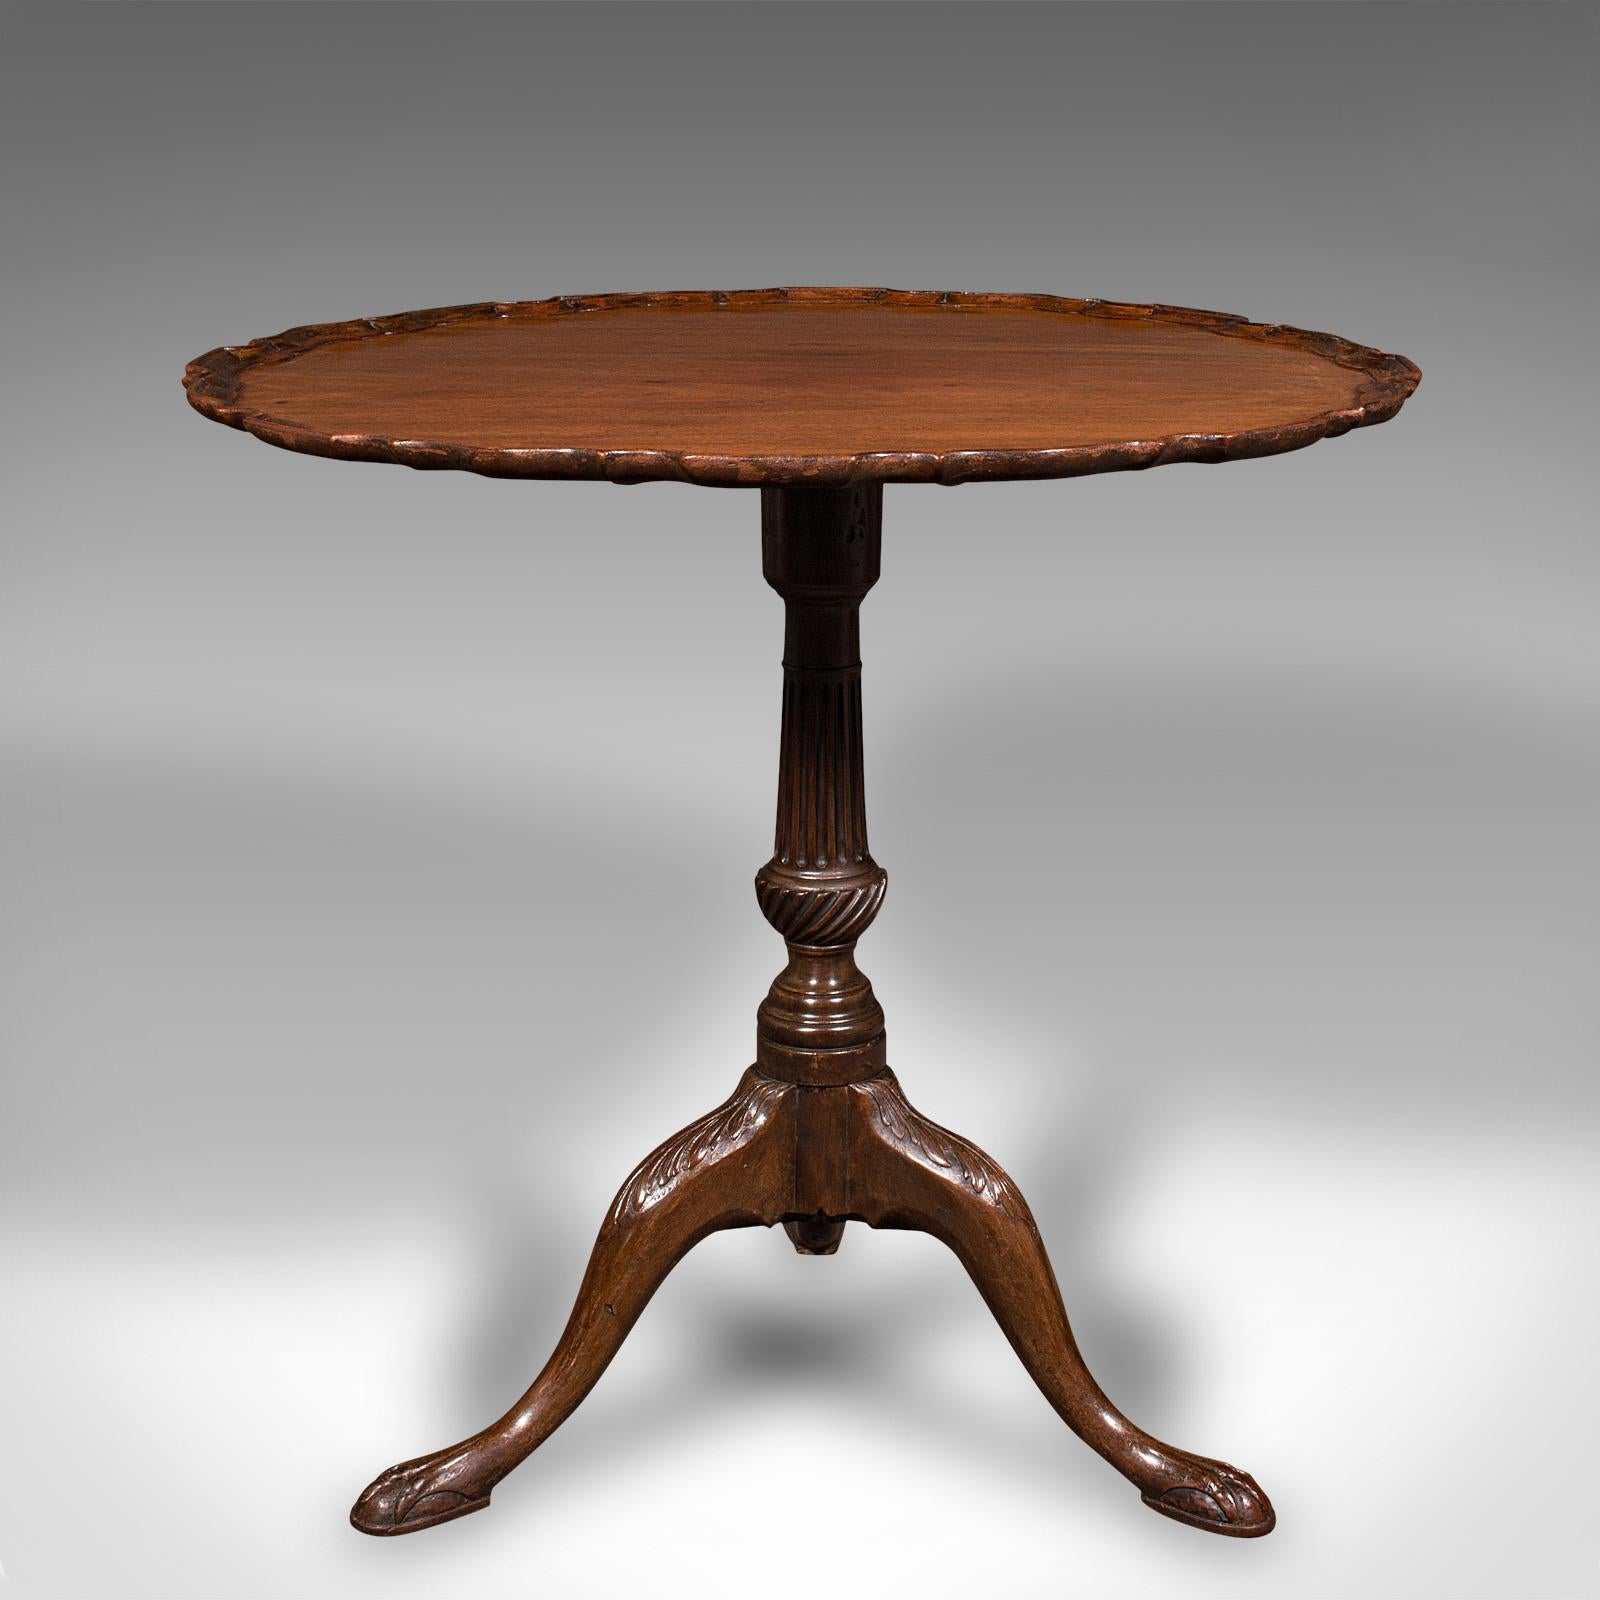 British Antique Pie Crust Lamp Table, English, Tilt Top, Occasional, Victorian, C.1870 For Sale